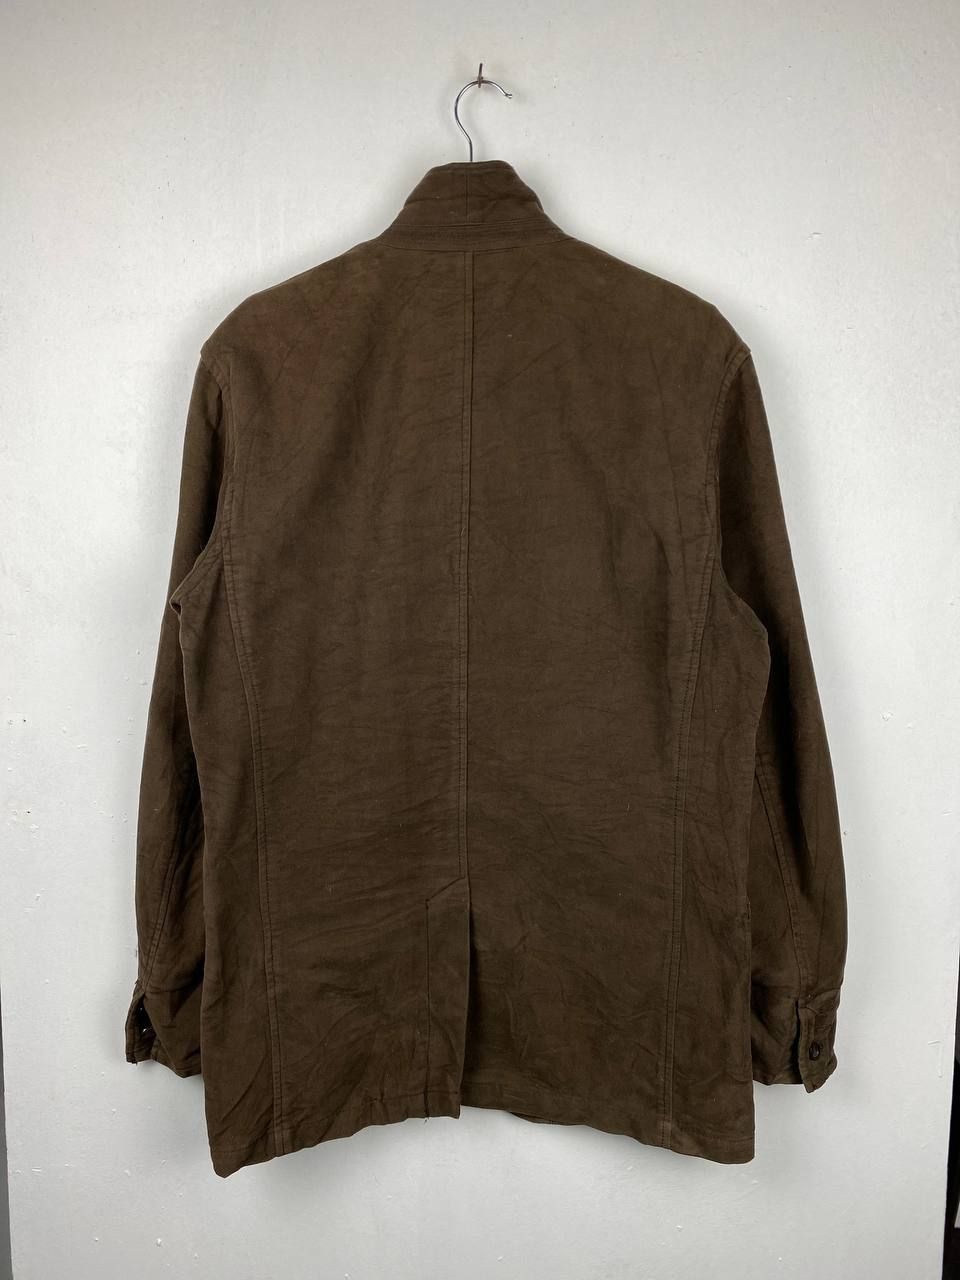 Gap gap japanese brands nice design jacket Size US M / EU 48-50 / 2 - 8 Thumbnail